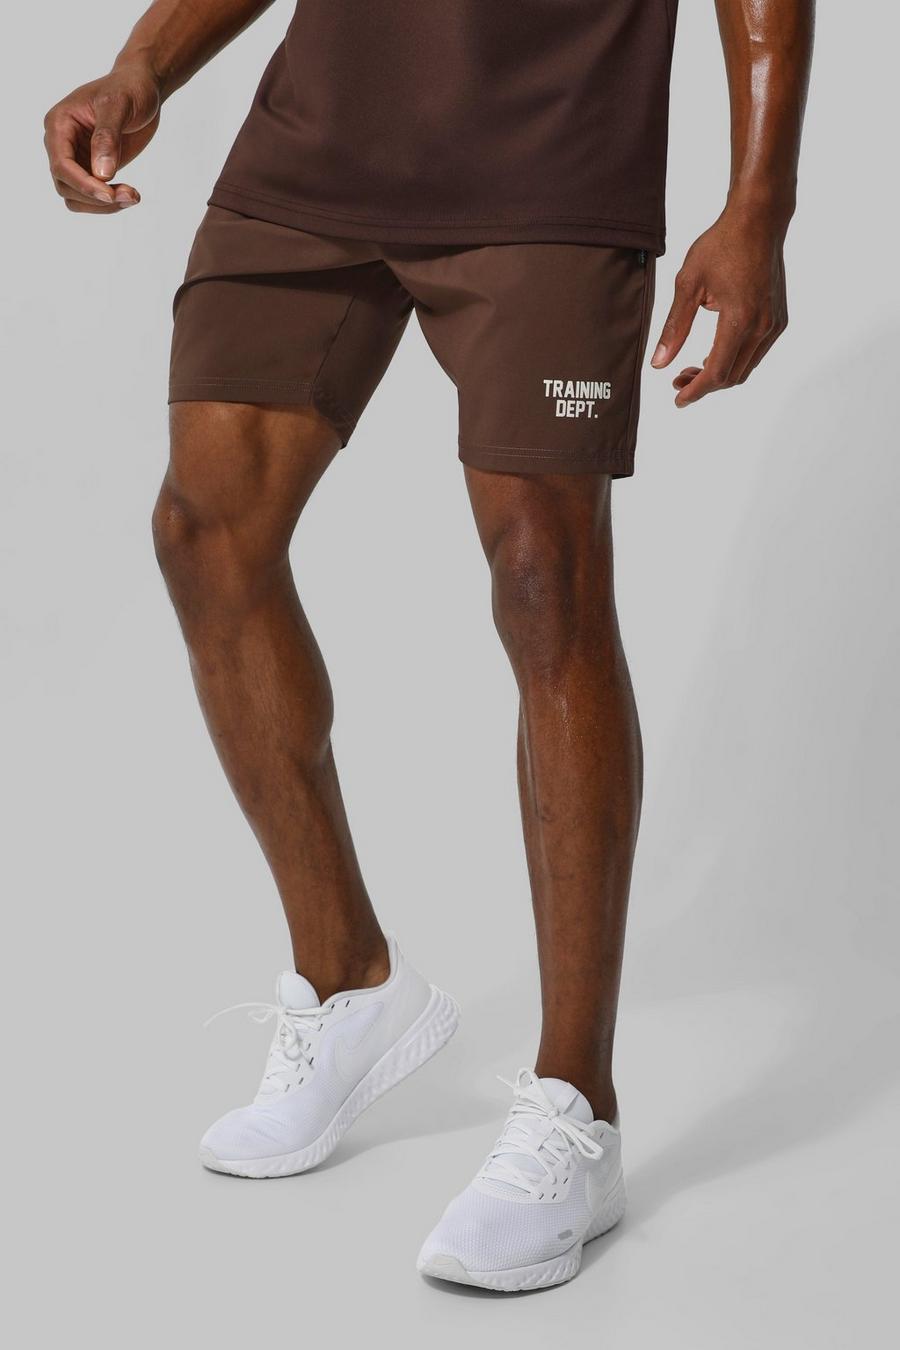 Chocolate marrón Man Active Performance Training Dept Shorts